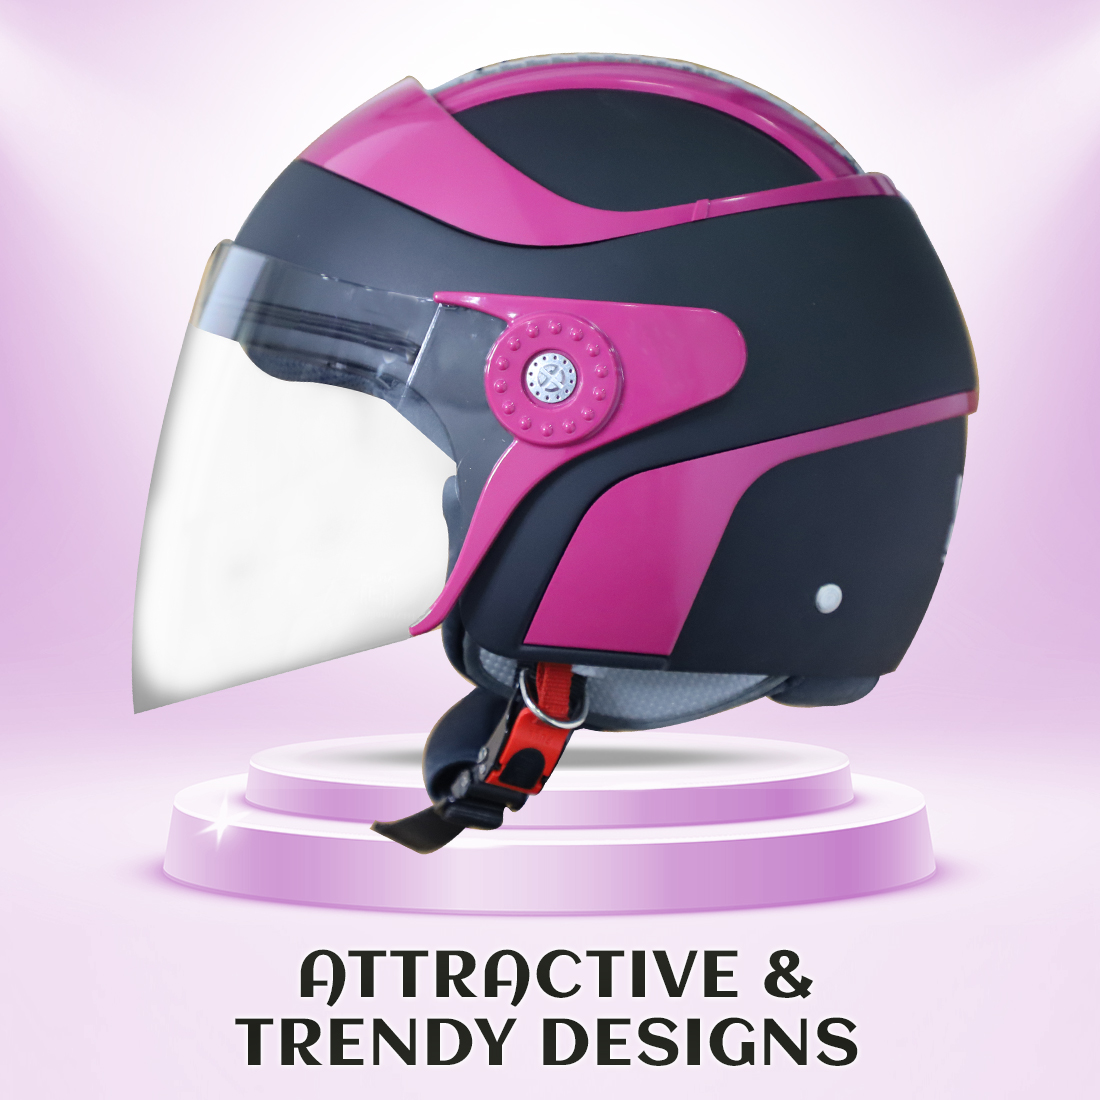 Steelbird SB-29 AER ISI Certified Open Face Helmet For Men And Women (Matt Black Pink With Clear Visor)